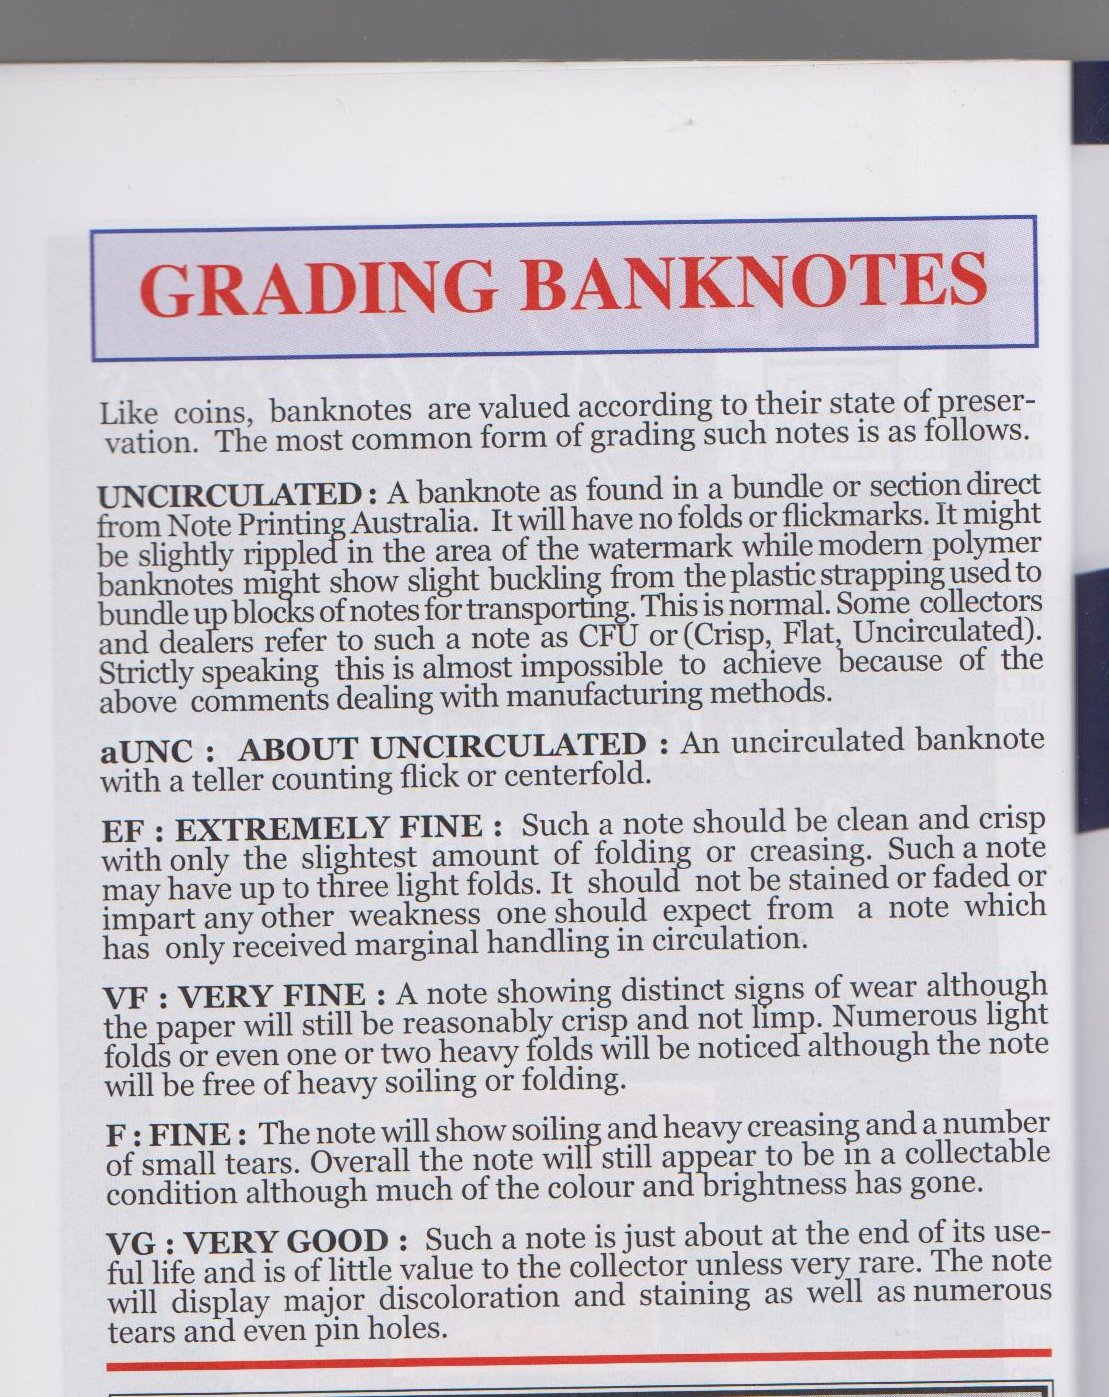 Grading Banknotes - Copy.jpg